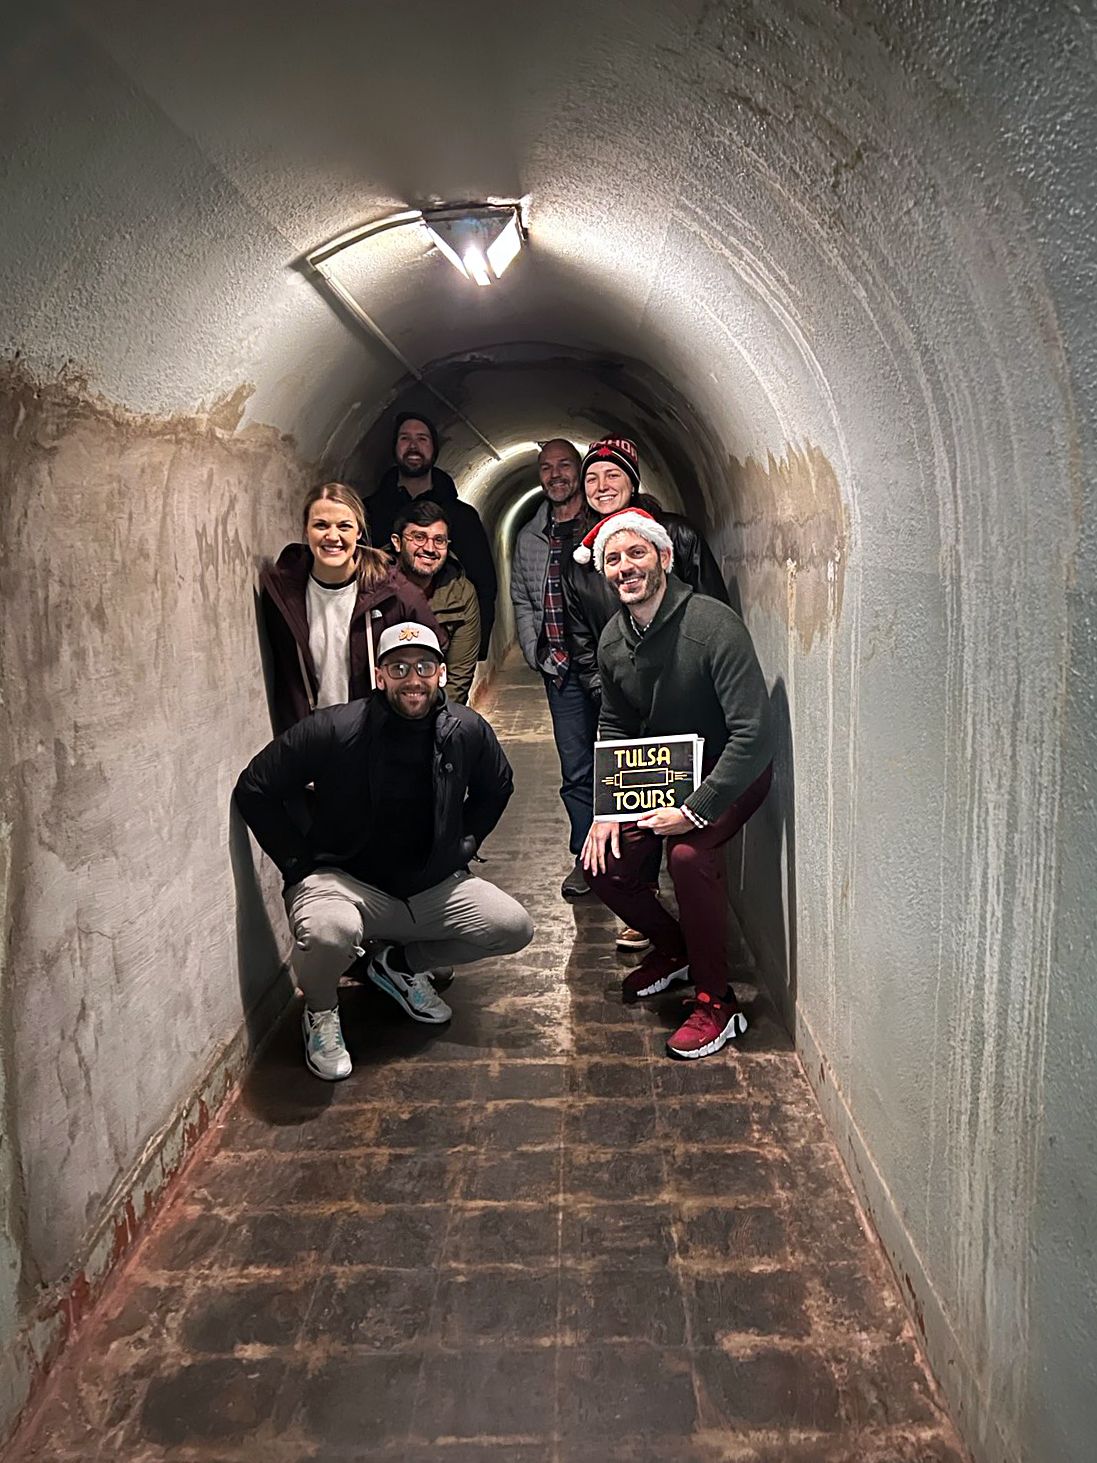 Tunnel Tour